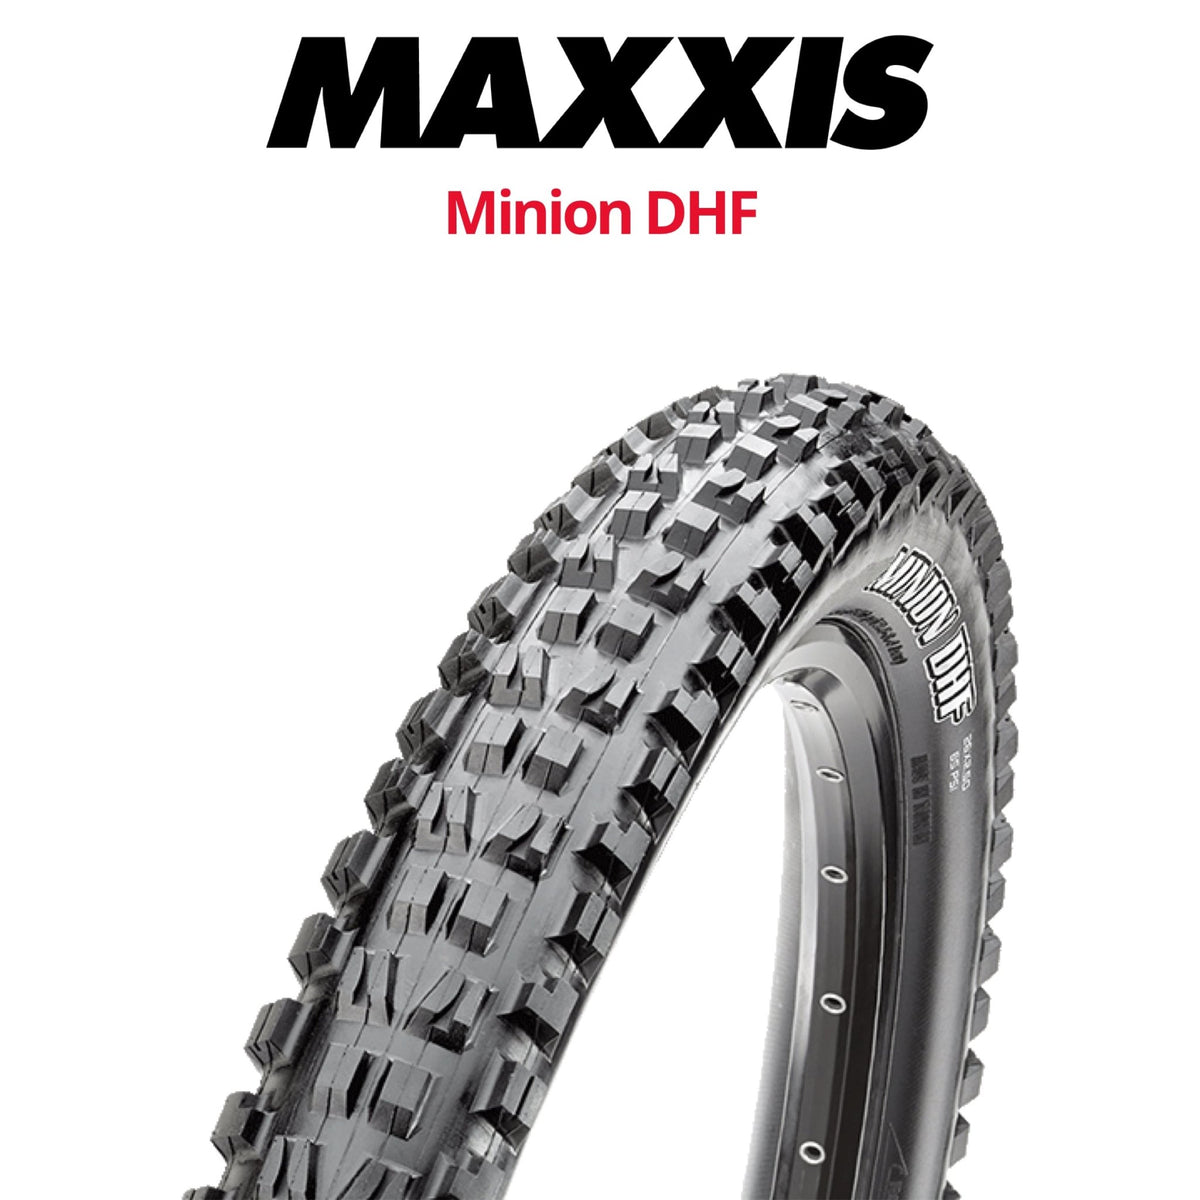 Maxxis Minion DHF | Bikecomponents.ca